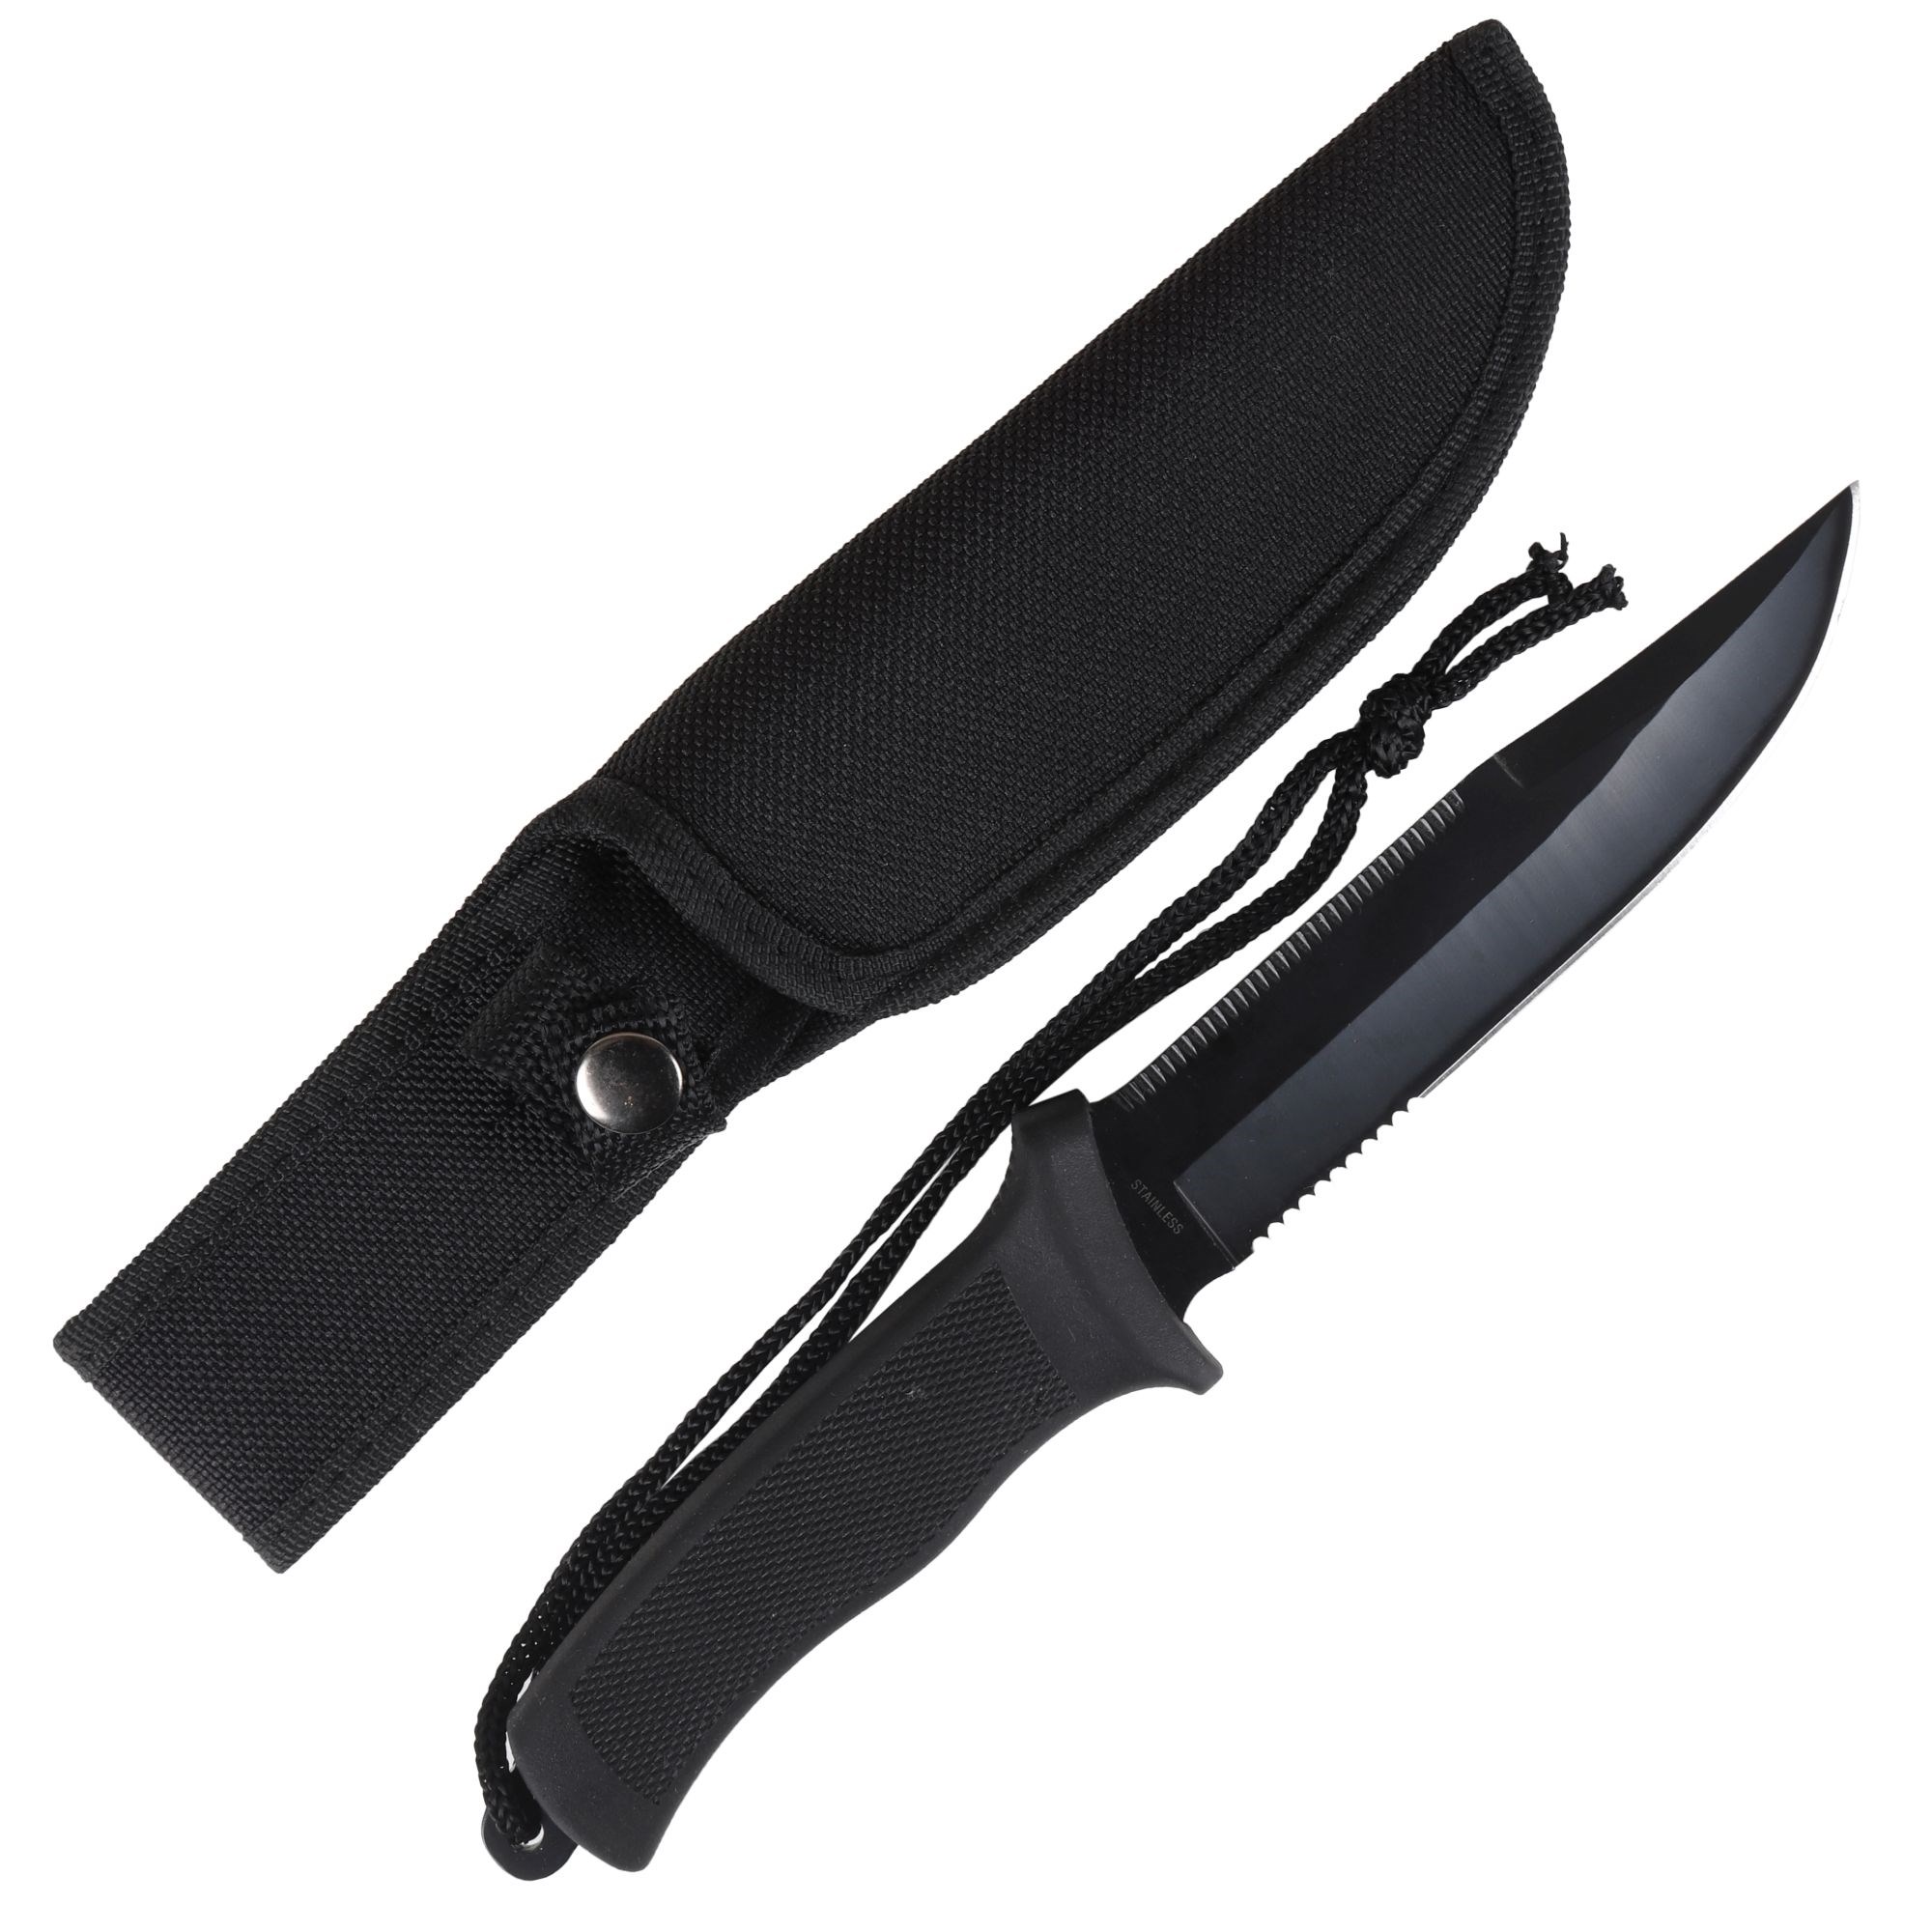 MIL-TEC Combat knife with case BLACK CORDURA | MILITARY RANGE